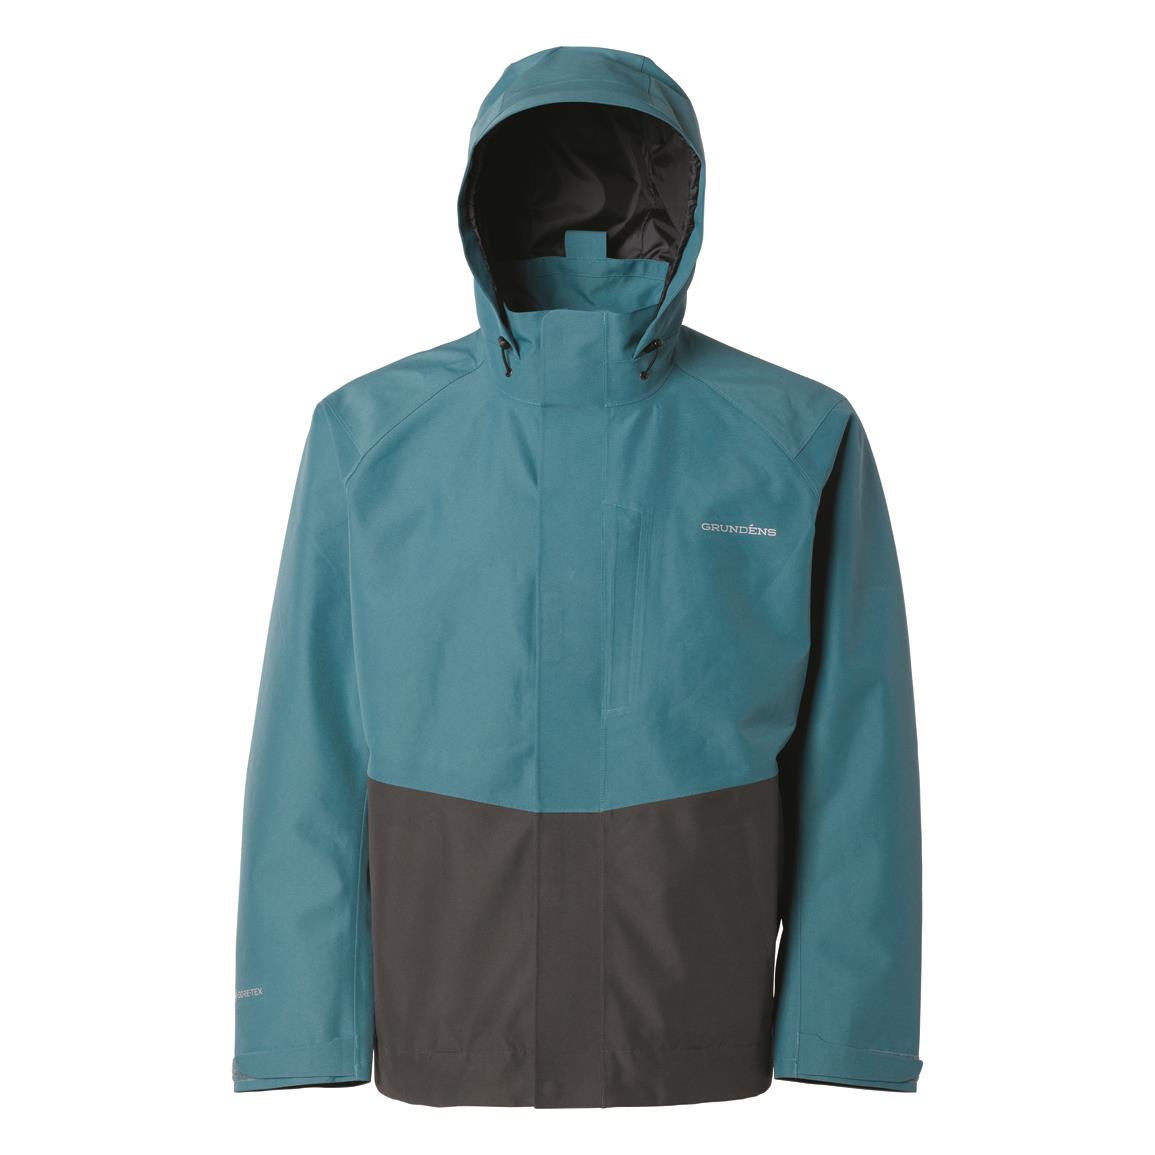 Grundens Men's Downrigger GORE-TEX Waterproof Jacket, Quarry